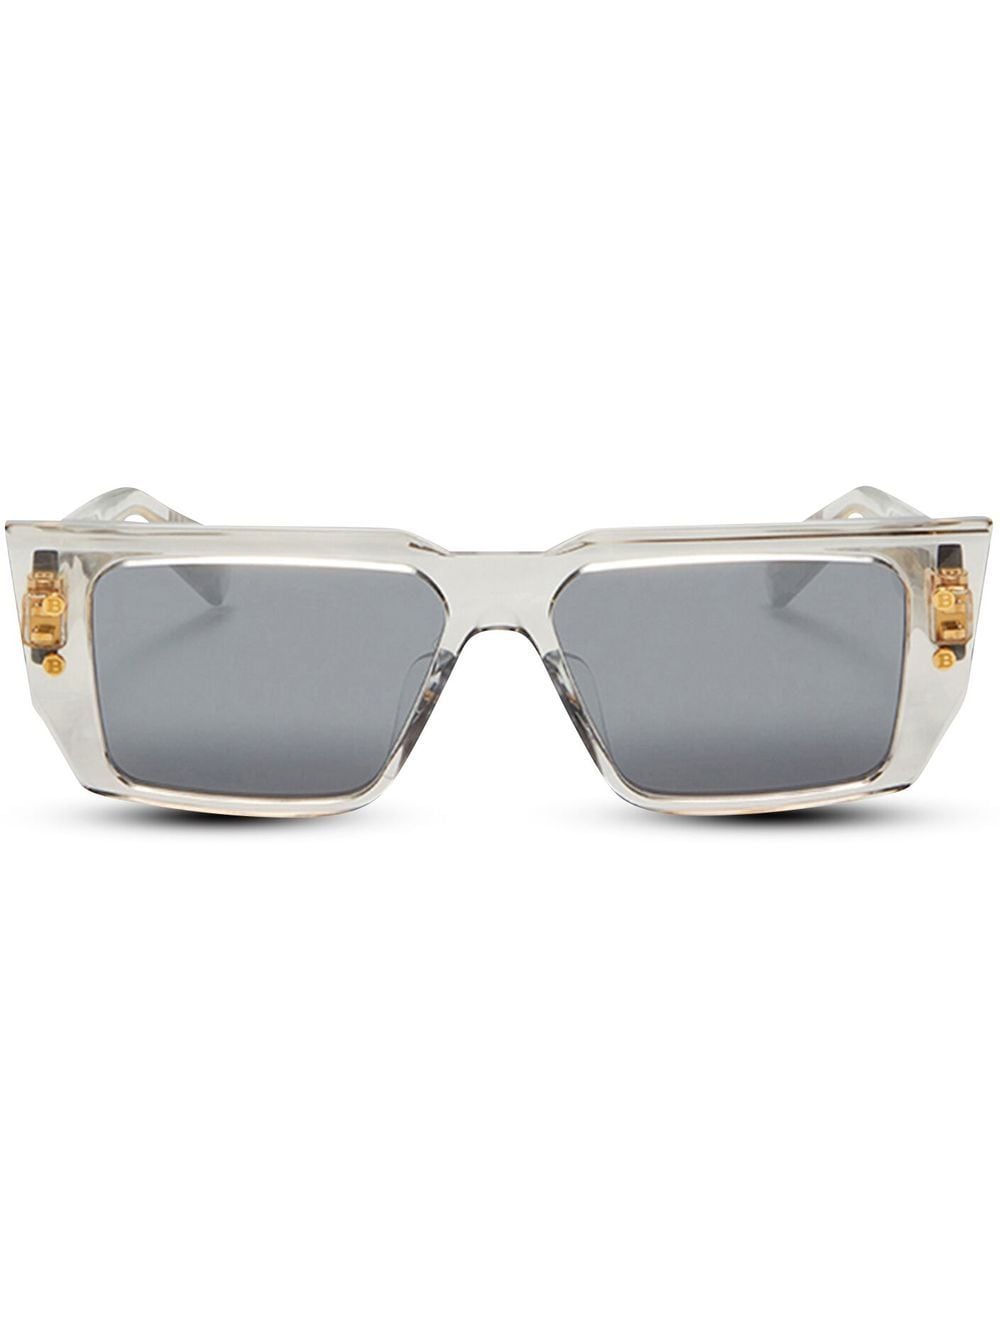 Balmain Eyewear B-VI square tinted sunglasses